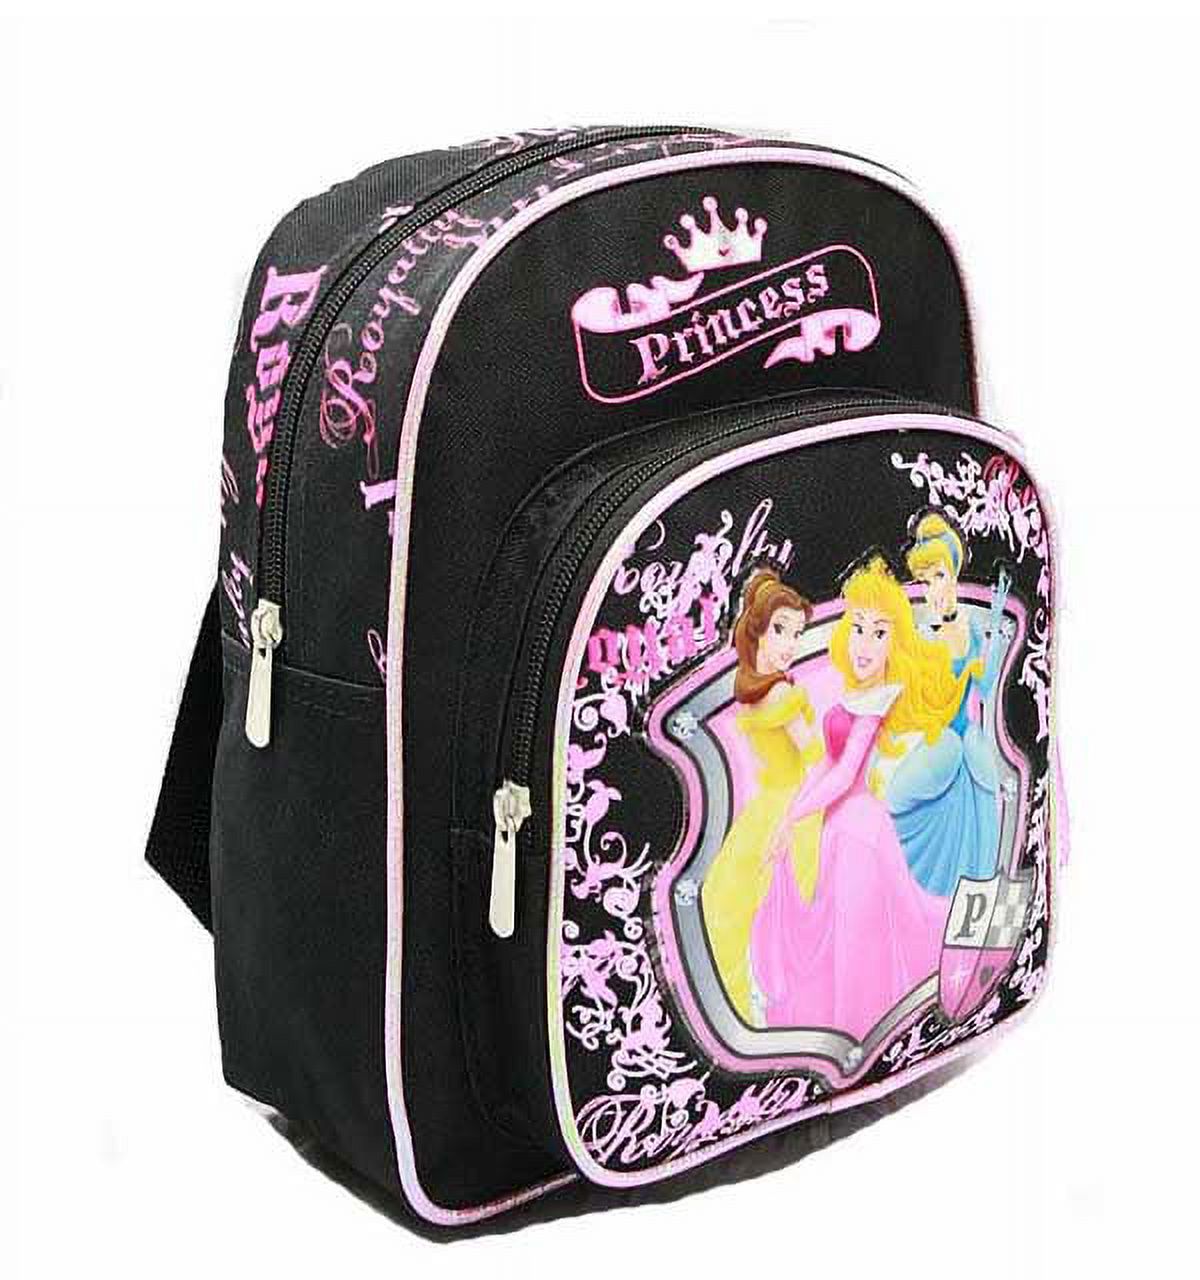 Mini Backpack - - Princess - w/Water Bottle Black New School Bag 35395 - image 2 of 3